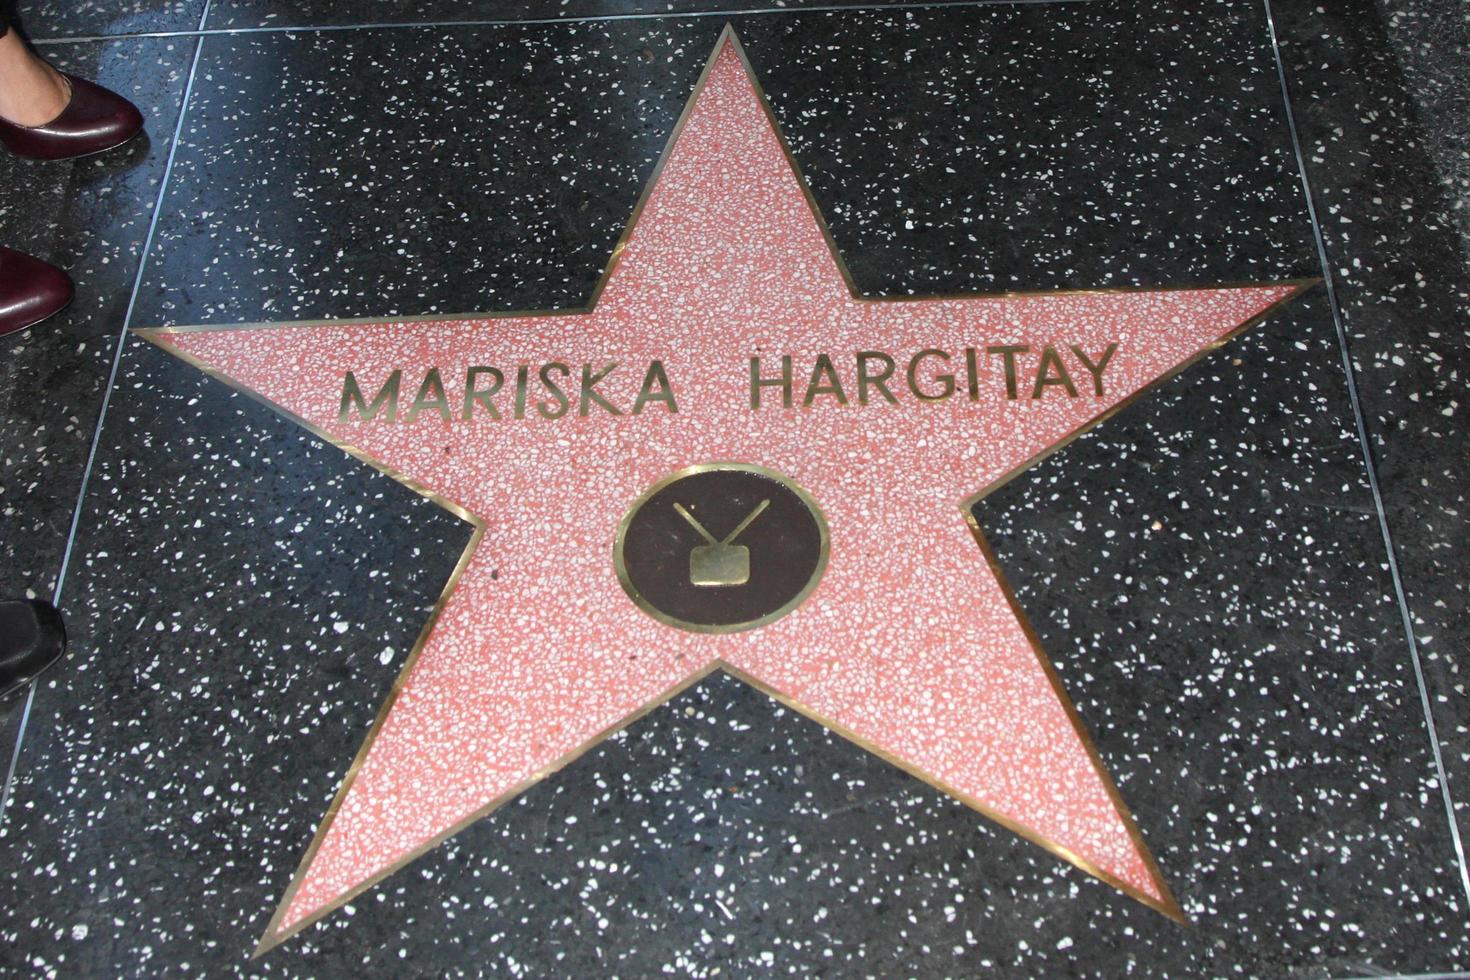 los angeles, 8 de novembro - estrela de mariska hargitay na cerimônia de estrela da caminhada da fama de mariska hargitay hollywood em hollywood blvd em 8 de novembro de 2013 em los angeles, ca foto